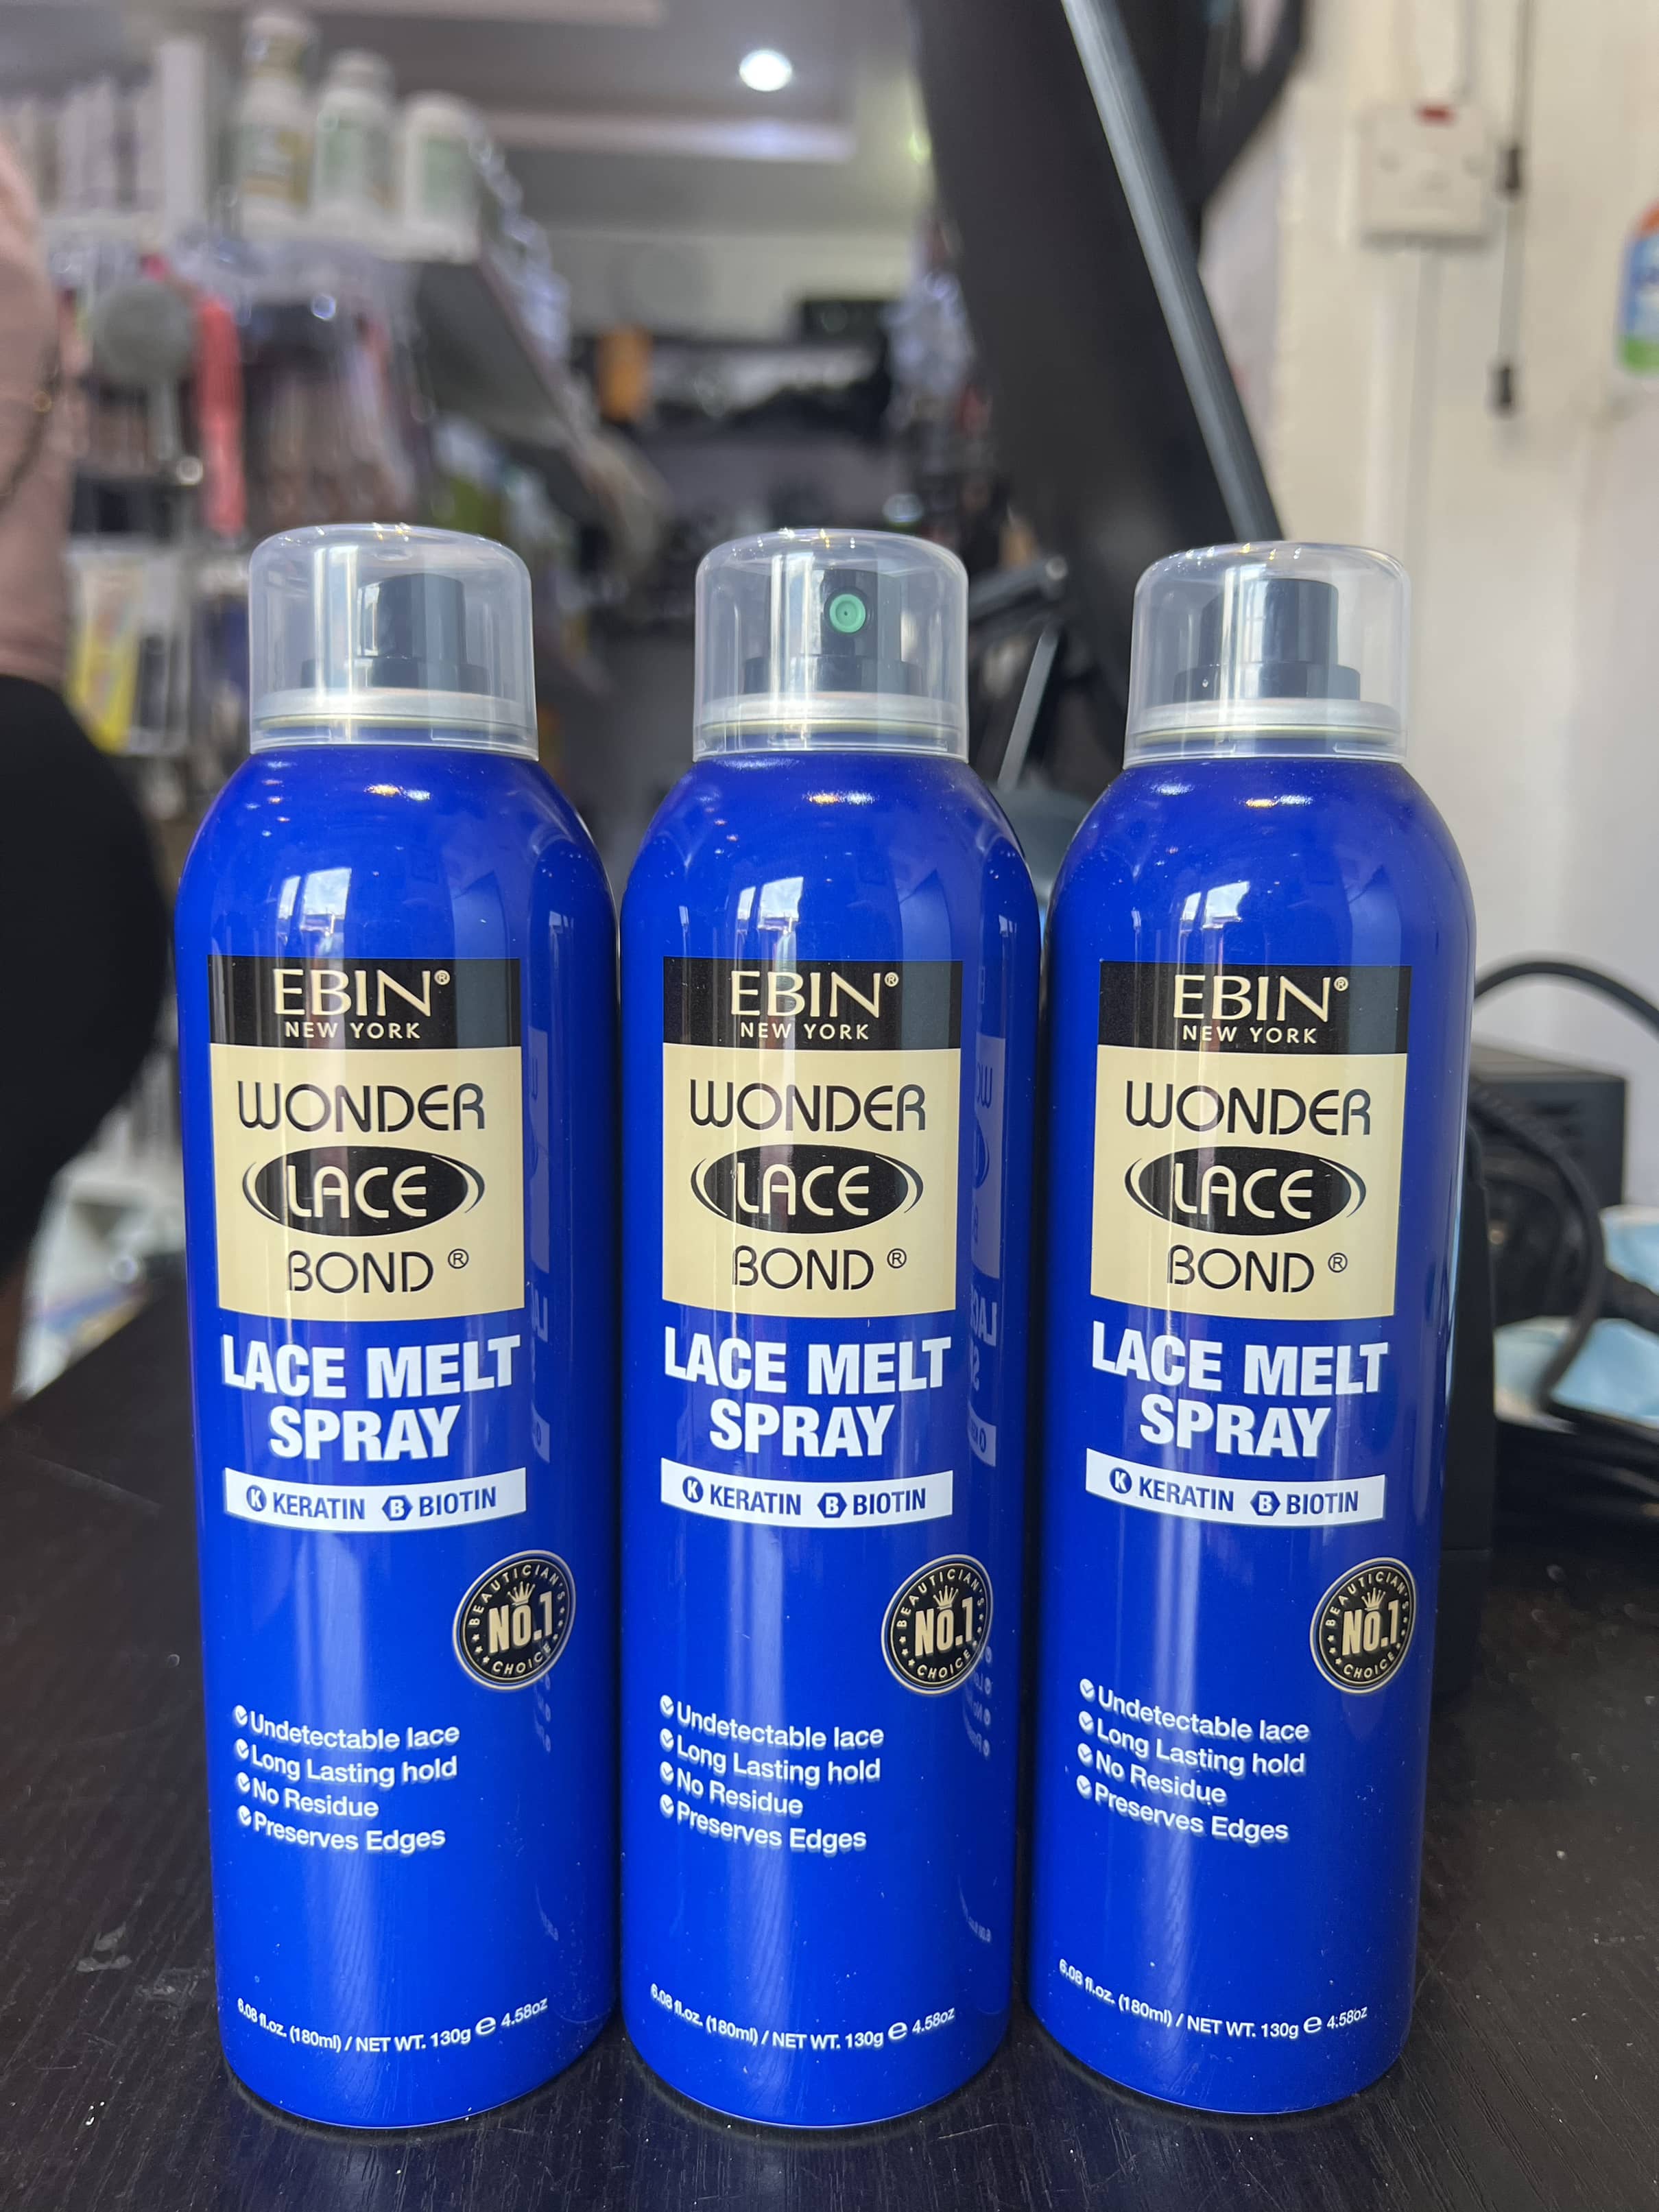 Ebin New York Wonder Lace Bond Lace Melt Spray